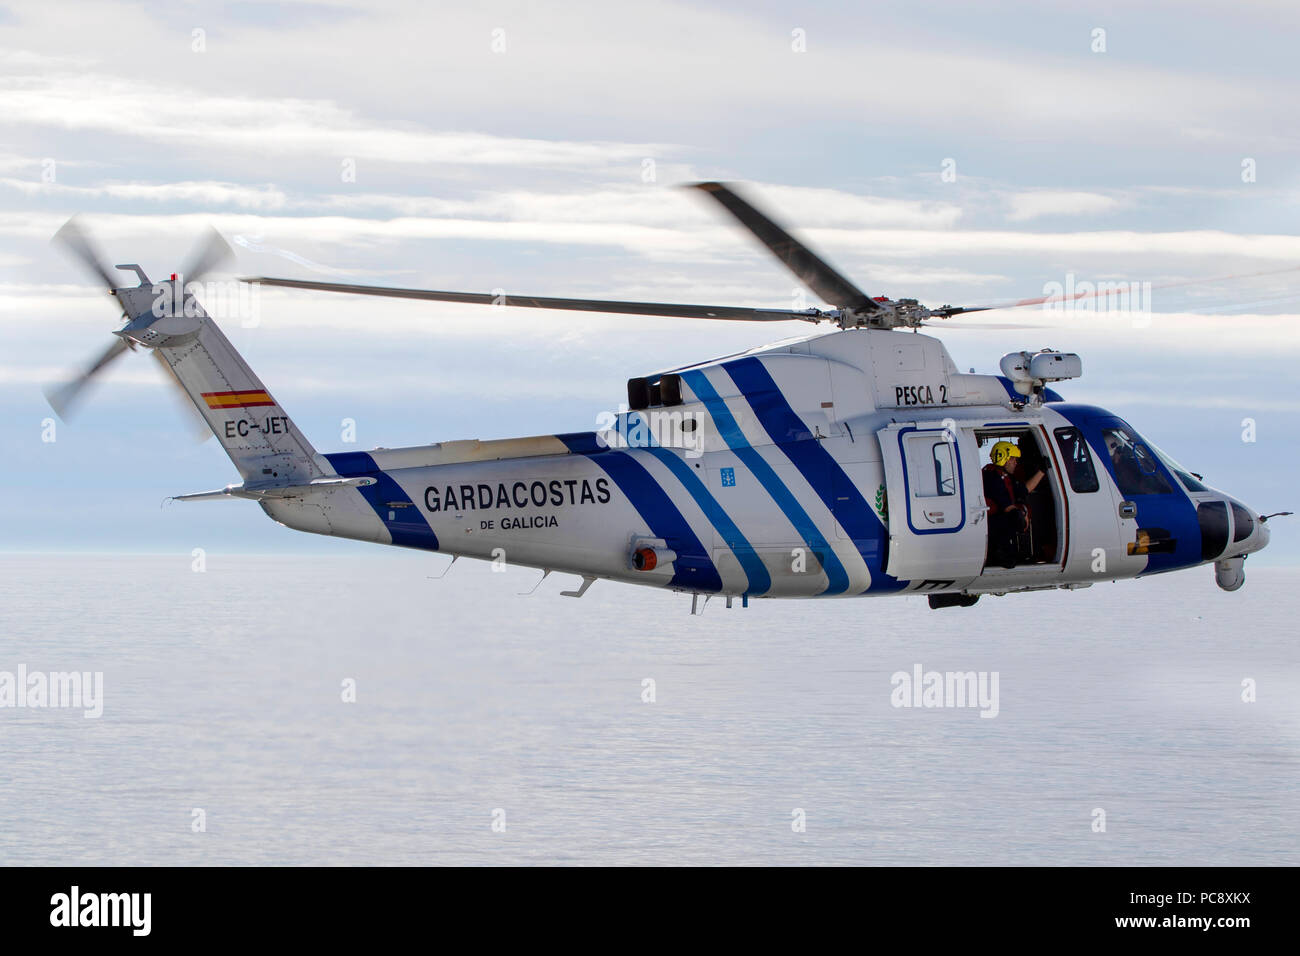 Gardacostas de Galicia Sikorsky S-76C CE-JET elicottero volando a bassa quota sopra il Mar Mediterraneo al largo della costa di Vigo, Spagna Foto Stock